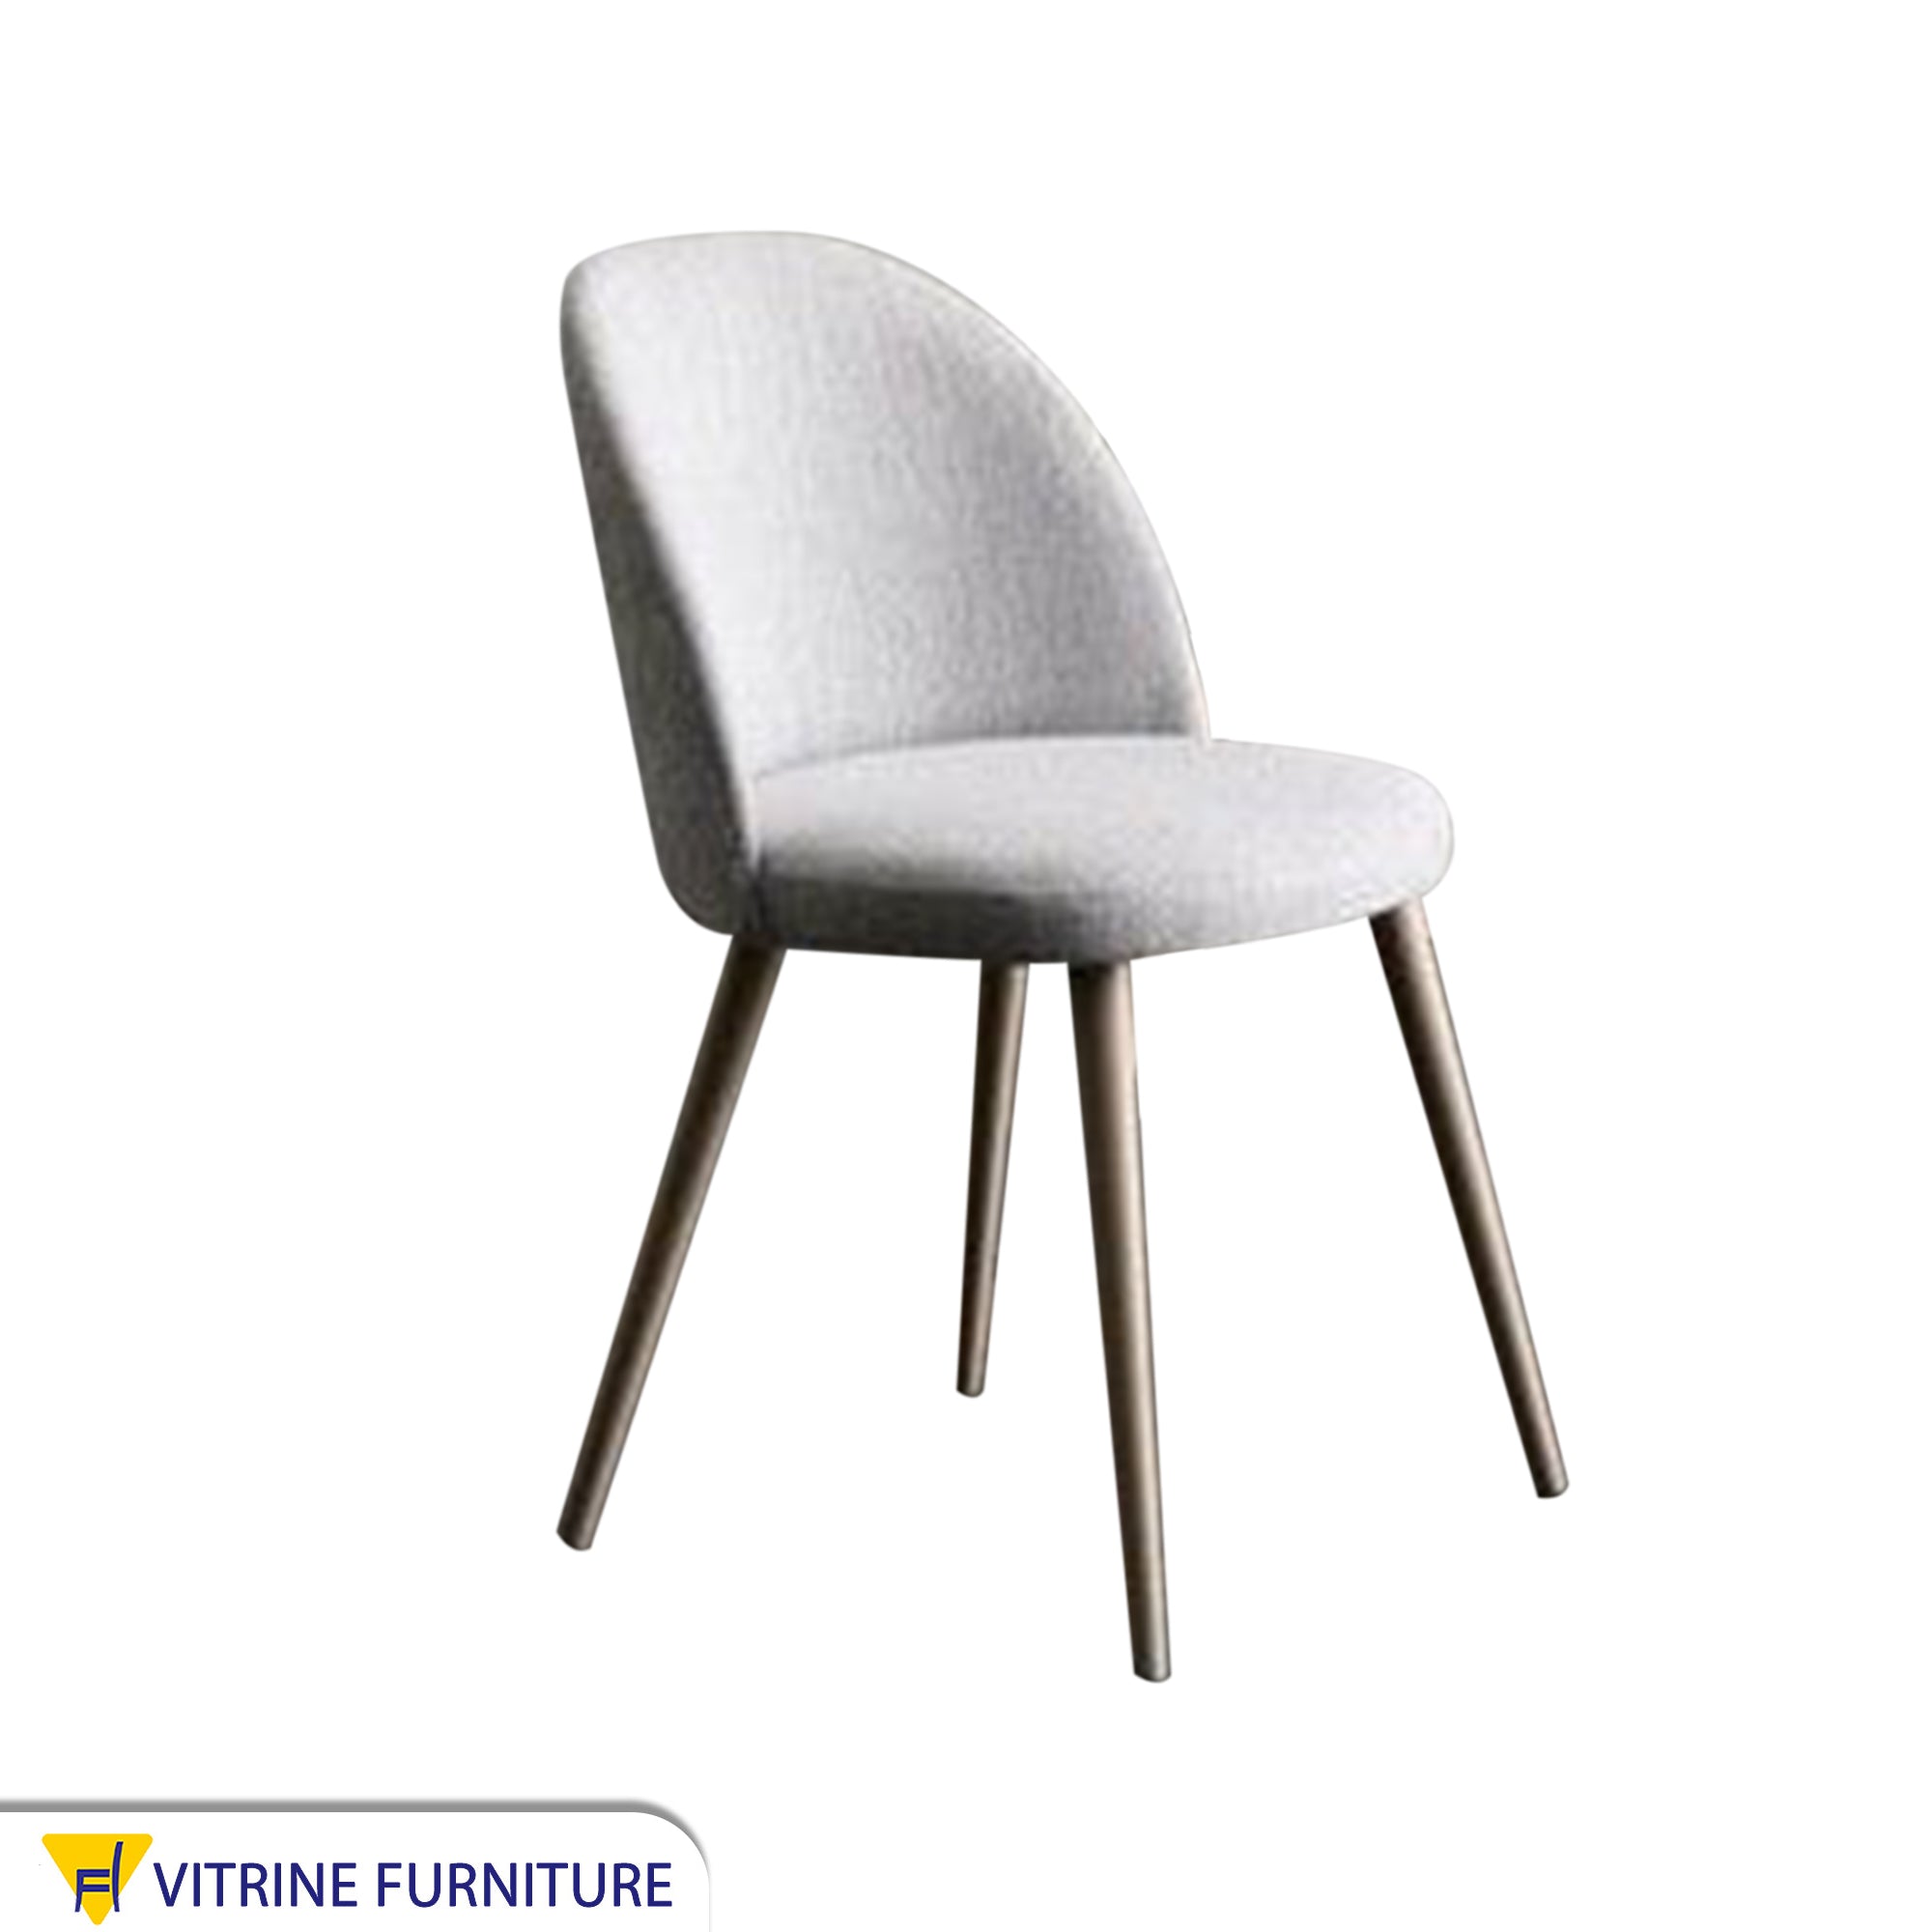 Light grey upholstered chair